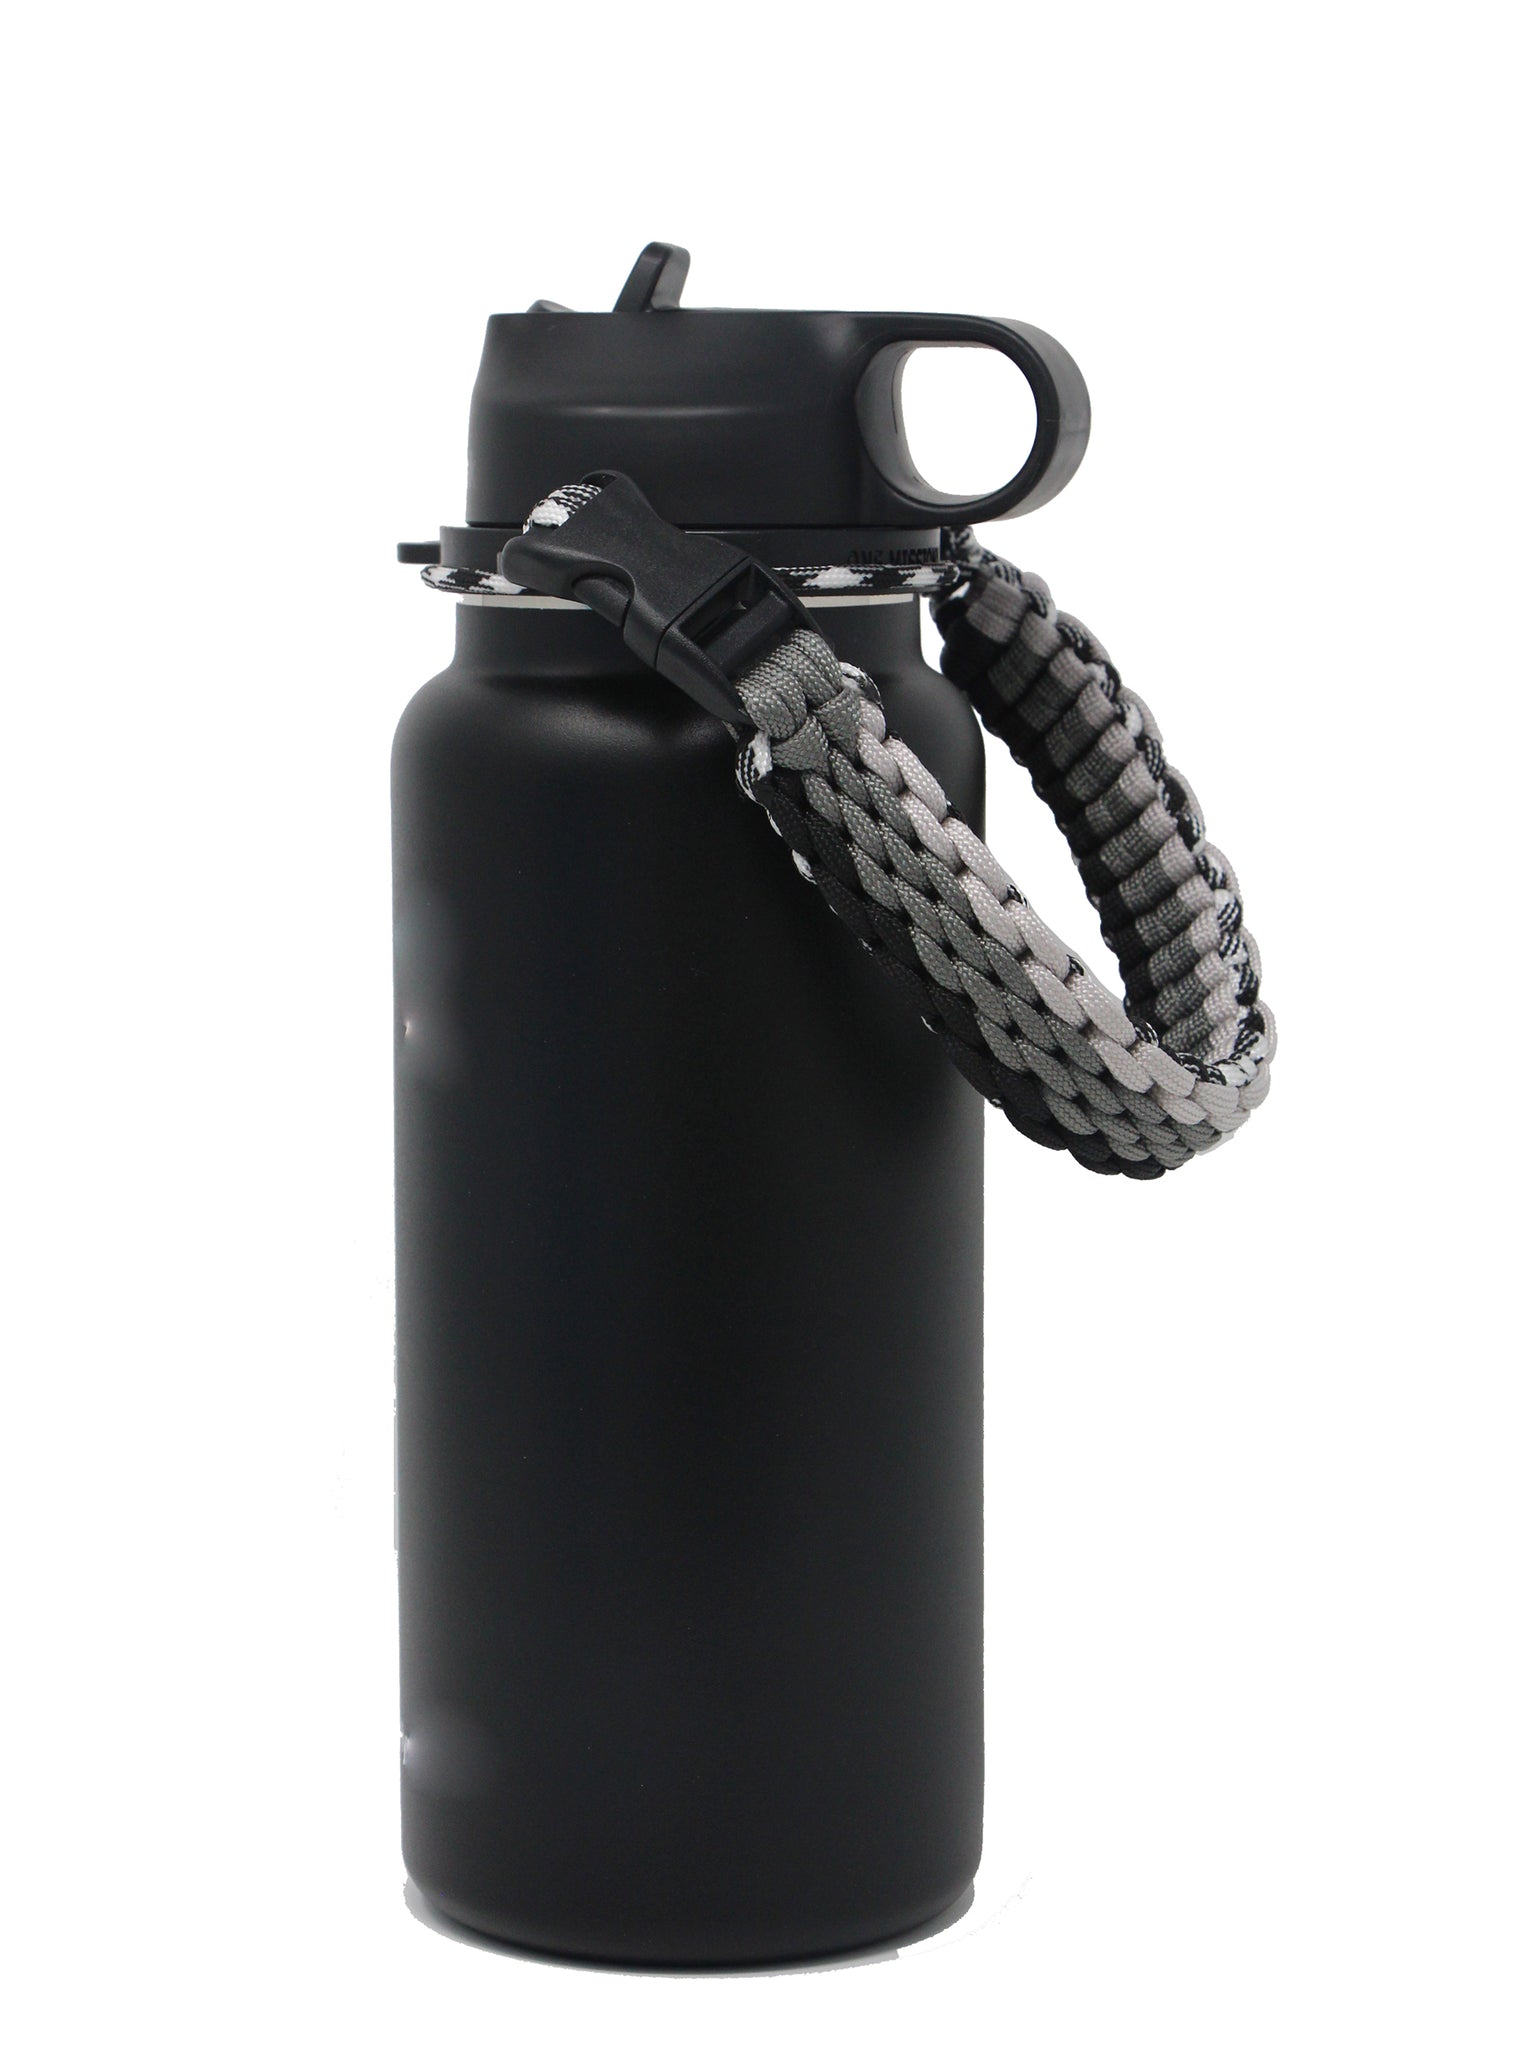 Hydroflask WIDE MOUTH Black Water Bottle 20 Oz